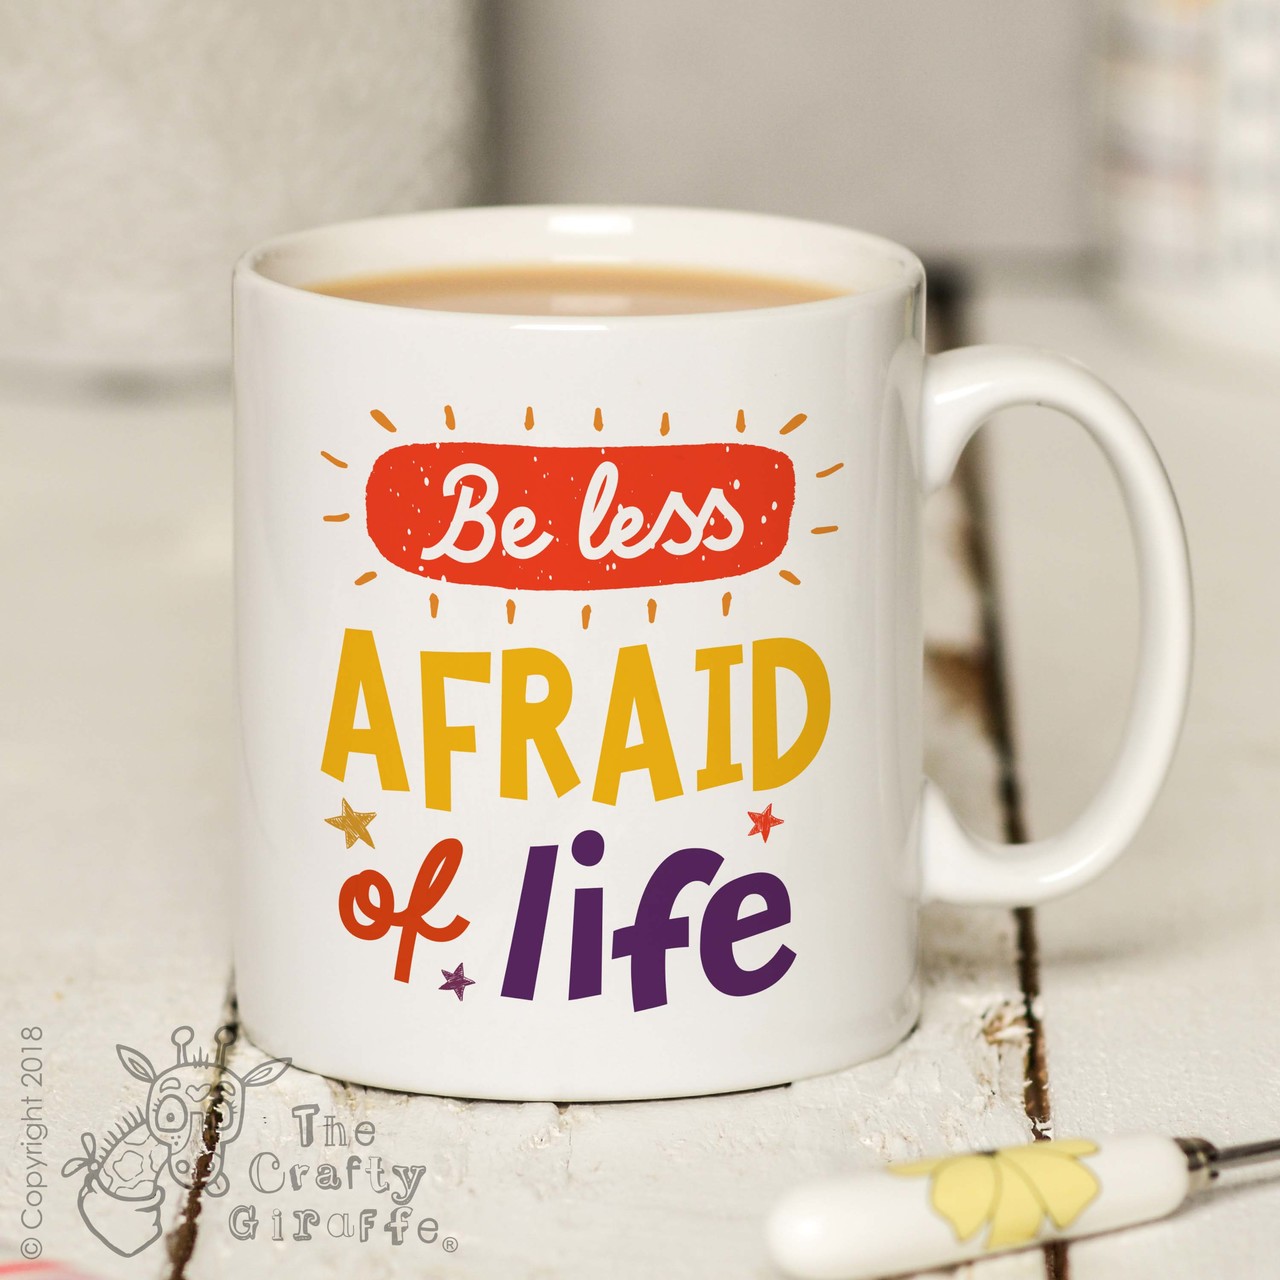 Be less afraid of life Mug